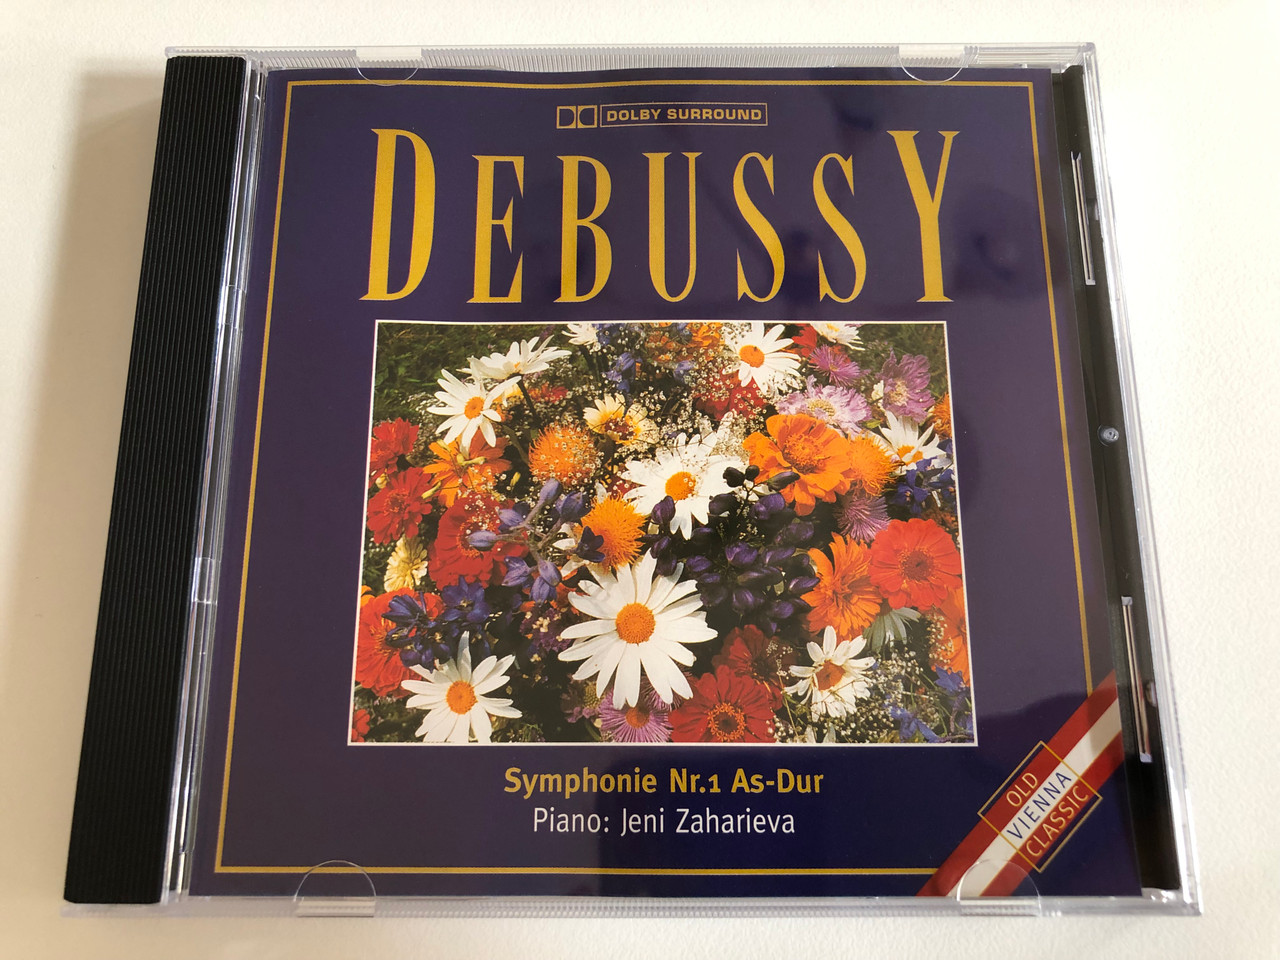 Debussy - Symphonie Nr. 1 As-Dur / Piano: Jeni Zaharieva / Old Vienna  Classic Audio CD Stereo / CD 155.544 - bibleinmylanguage